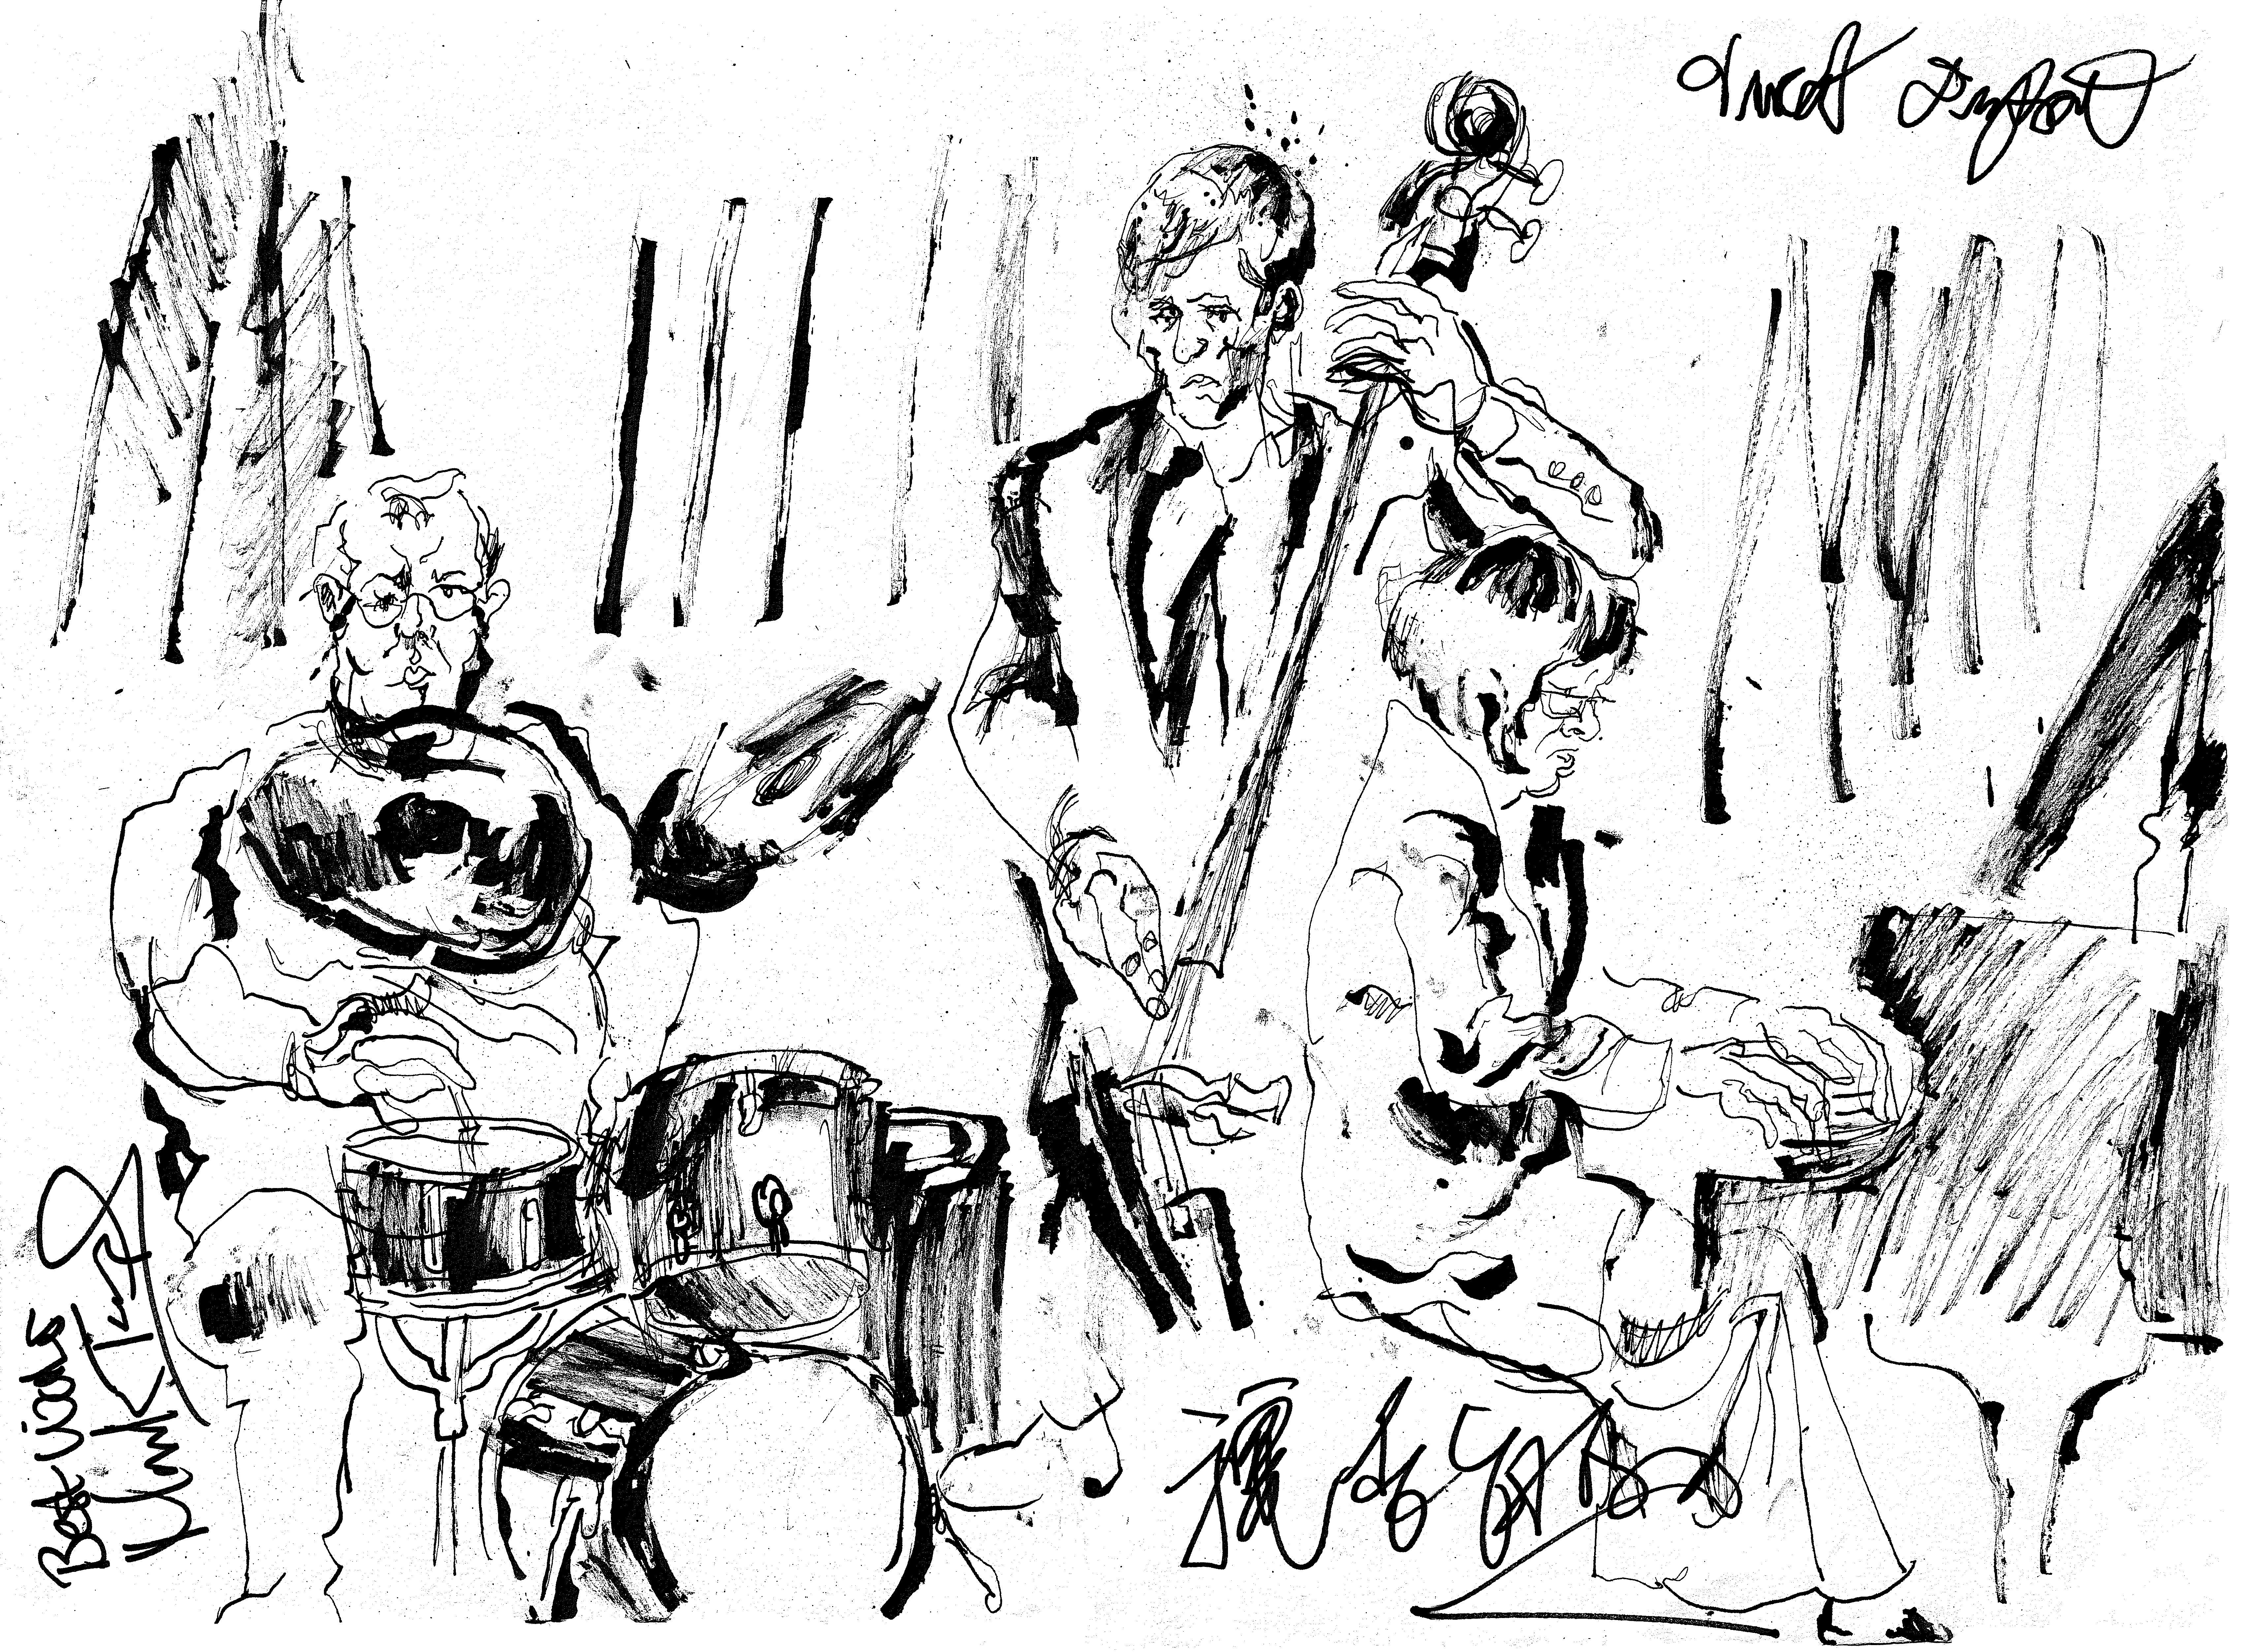 Toshiko Akiyoshi Trio at Jazz Forum Arts - Ink on Paper - Original Sketch